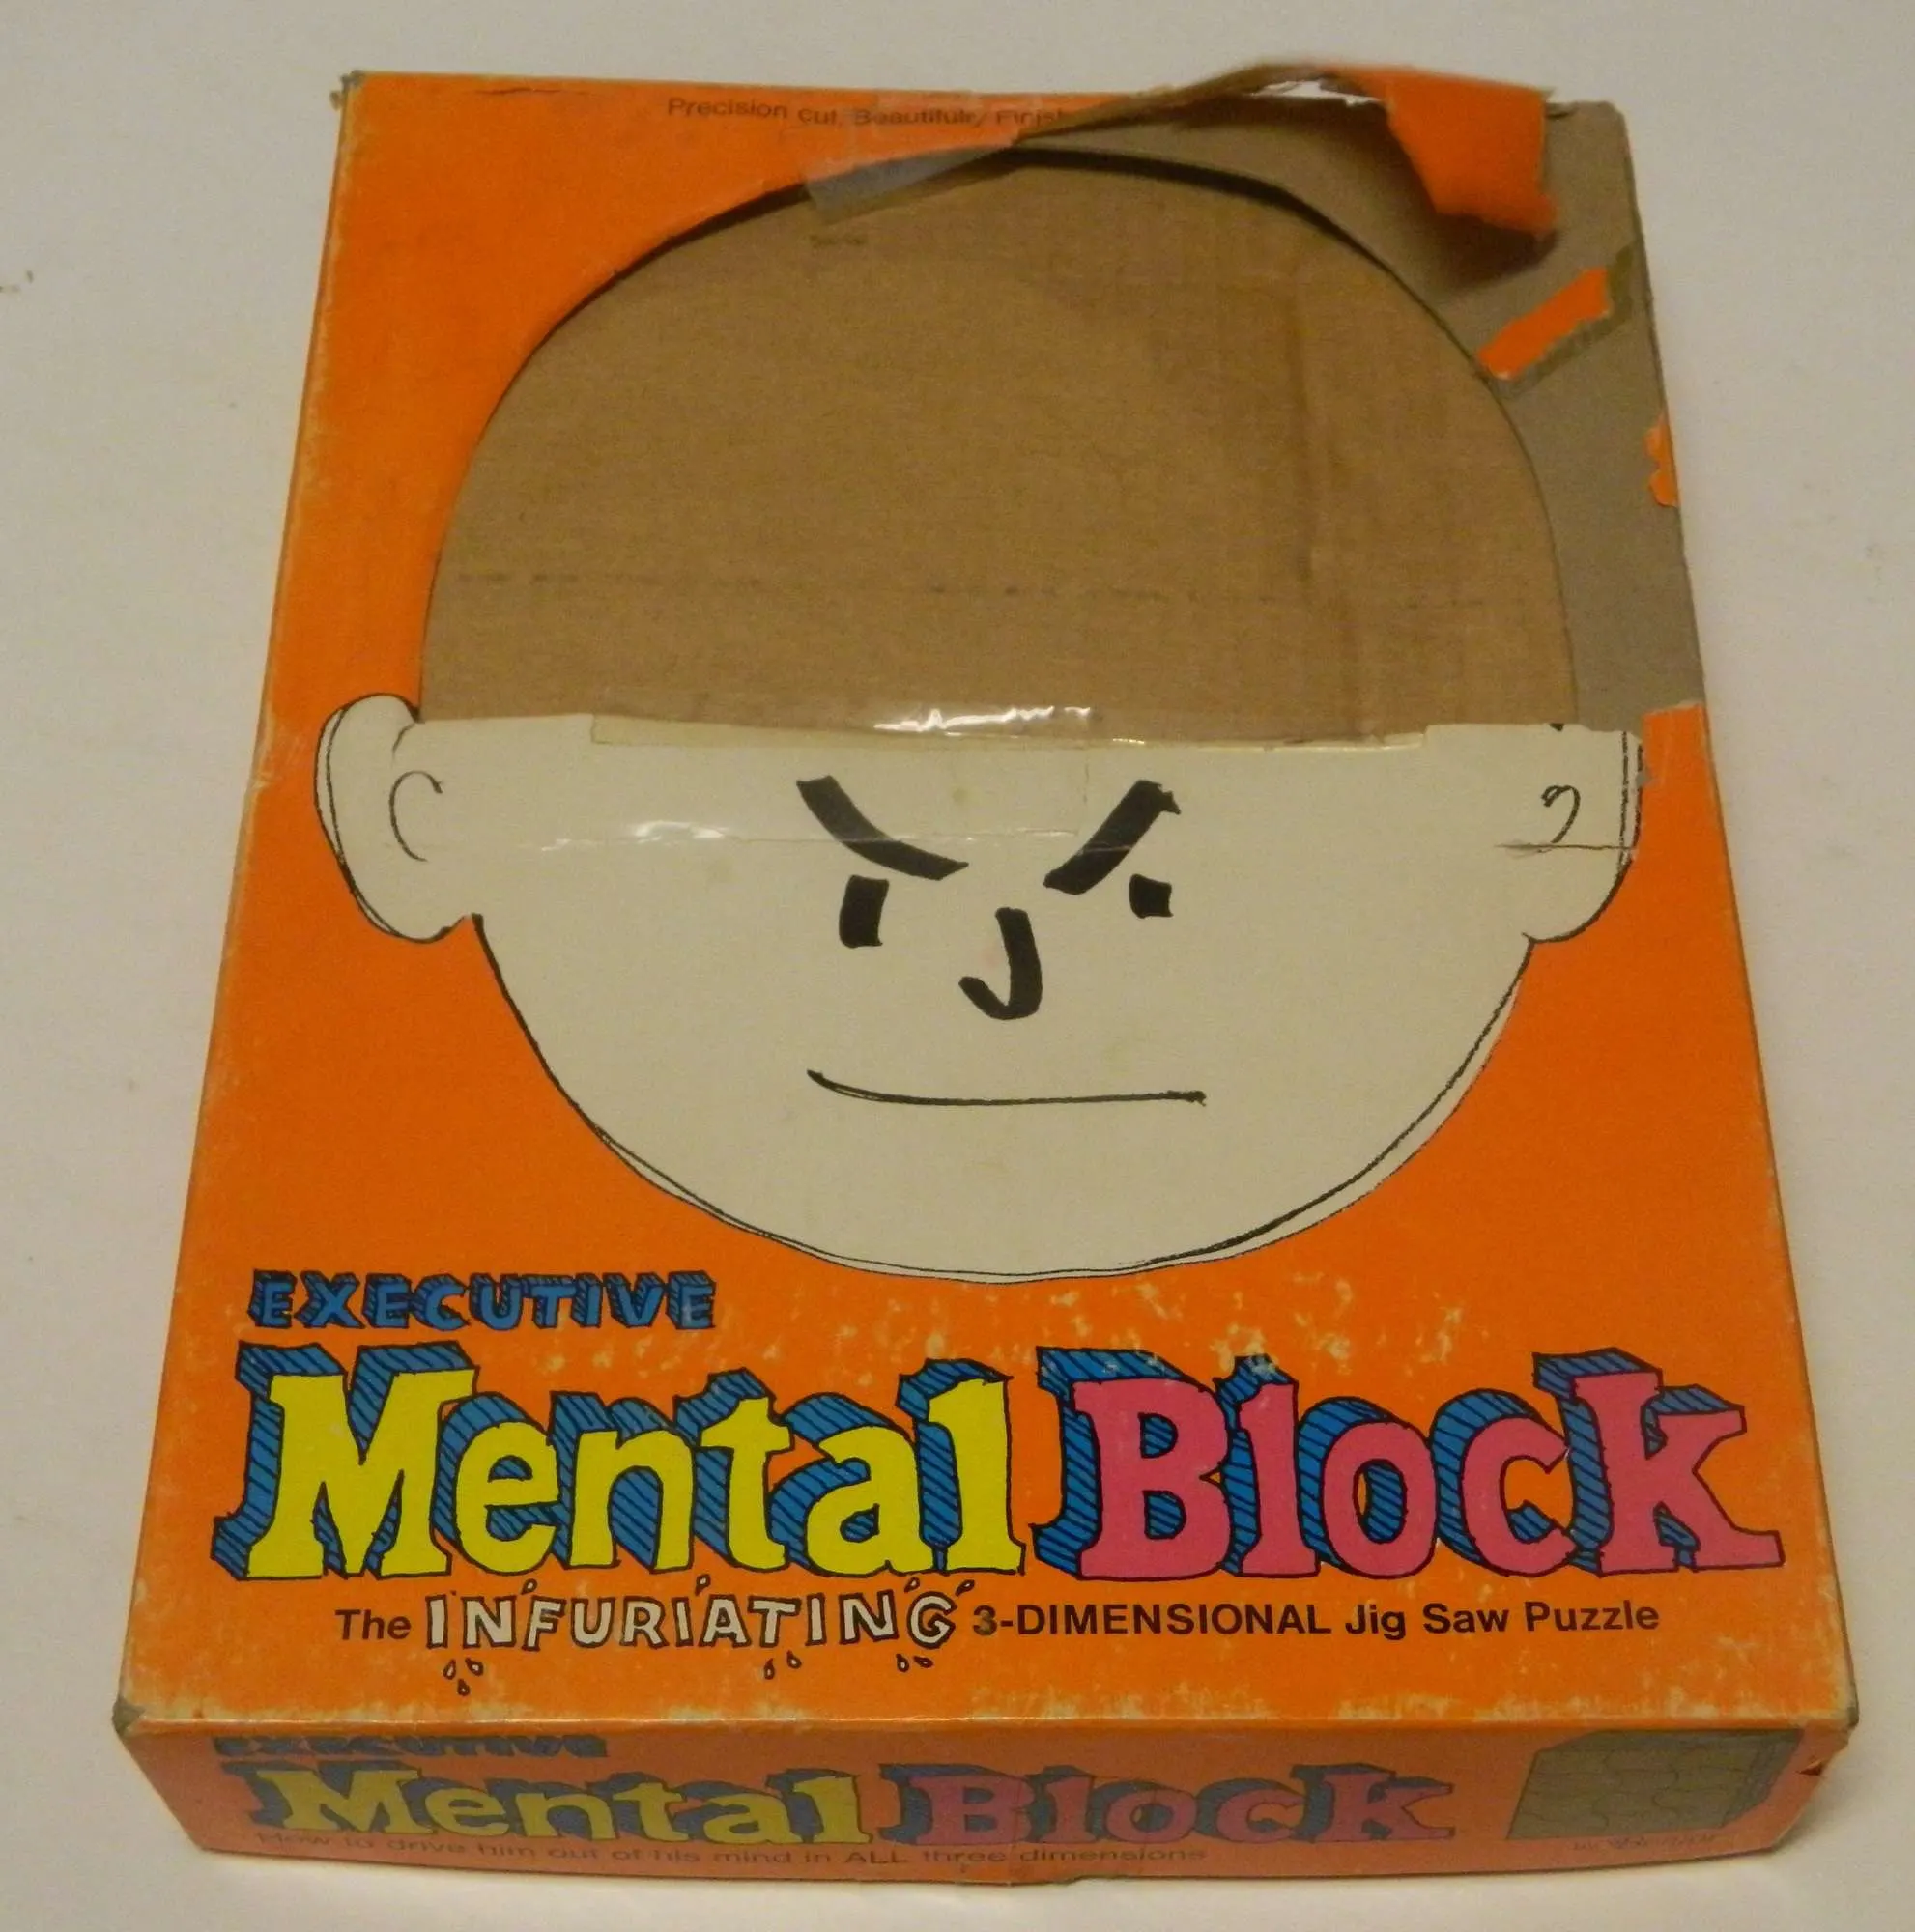 Box for Executive Mental Block